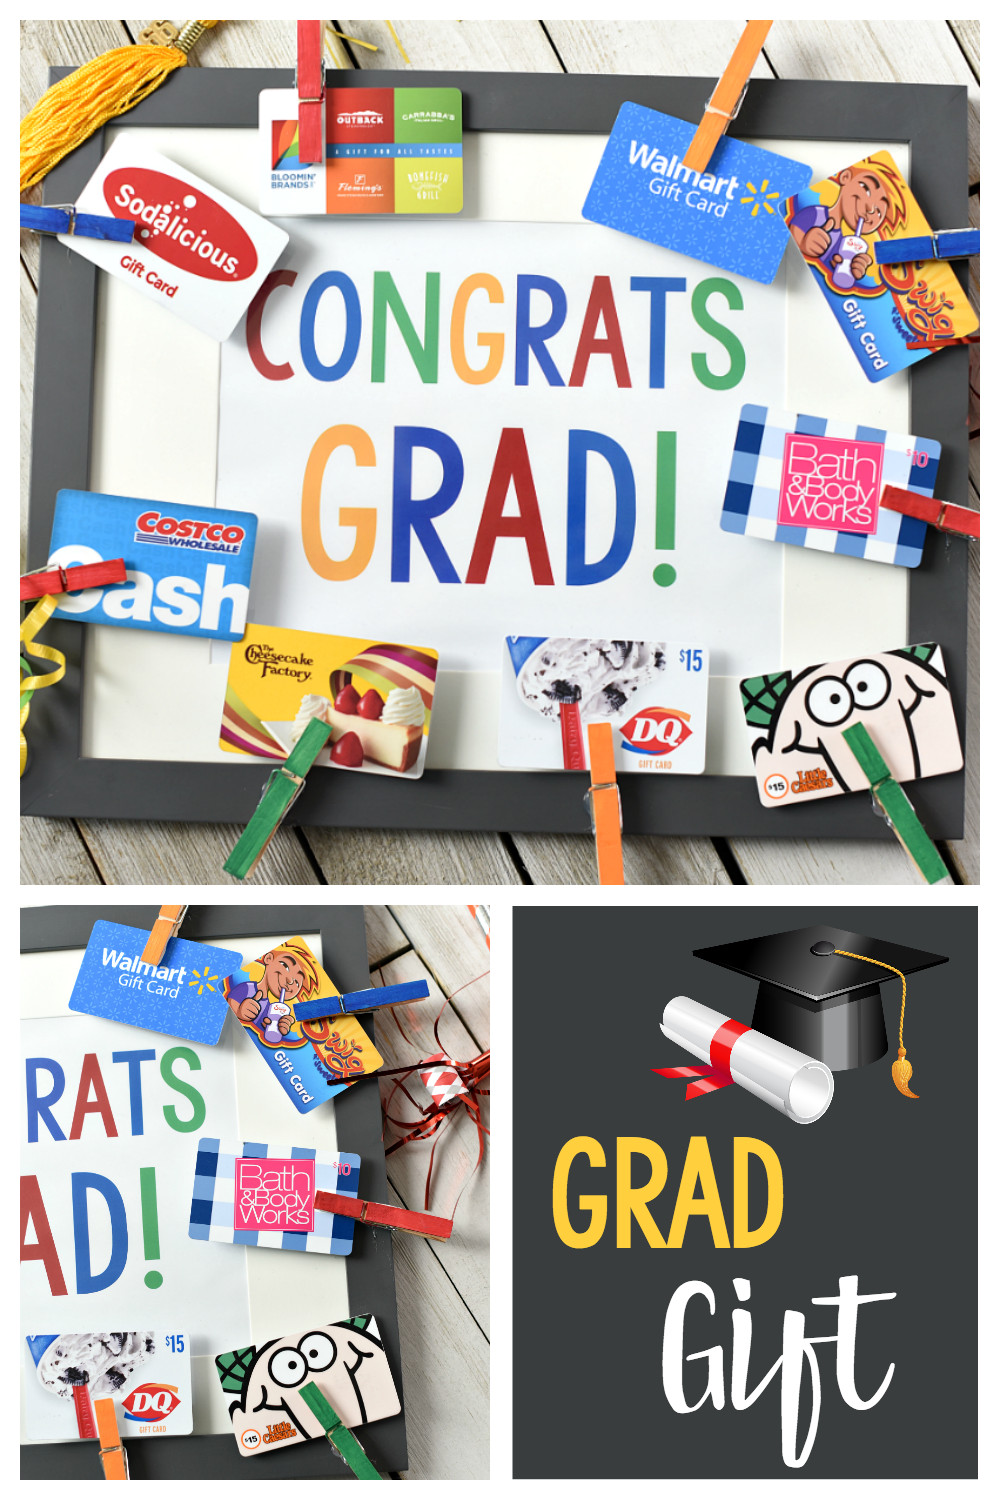 High School Graduation Gift Ideas
 Cute Graduation Gifts Congrats Grad Gift Card Frame – Fun